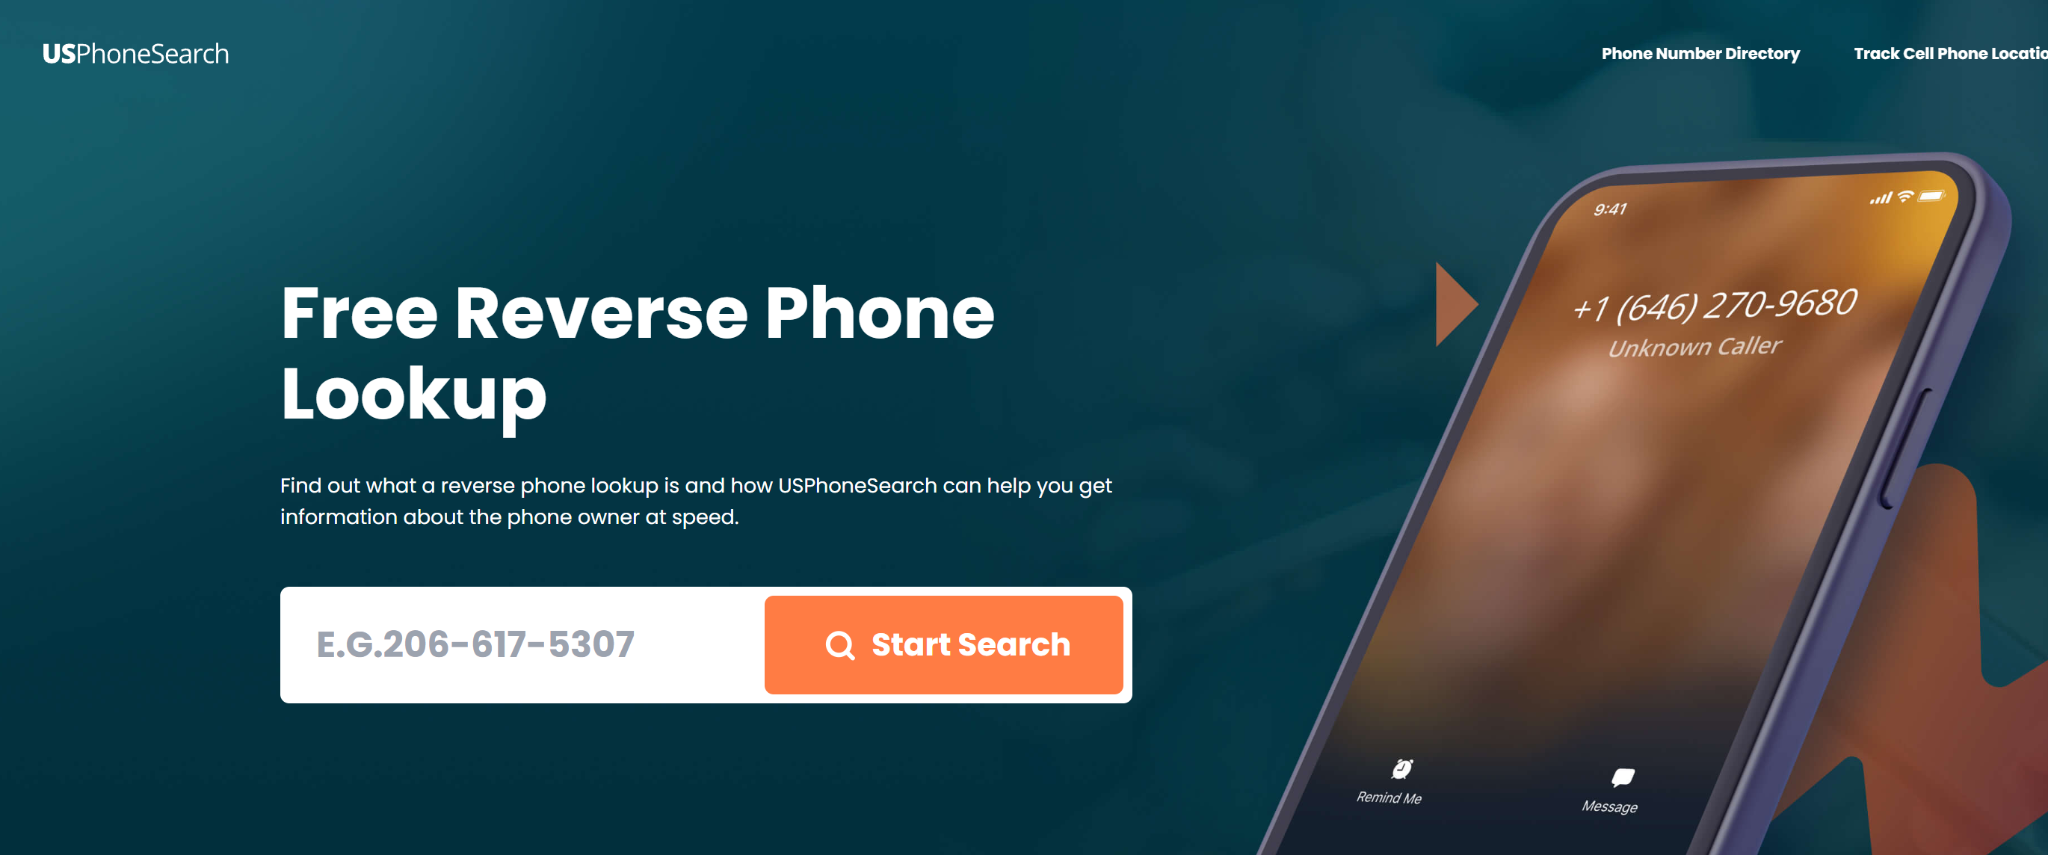 USPhoneSearch Review: Online Best Reverse Phone Lookup Platform